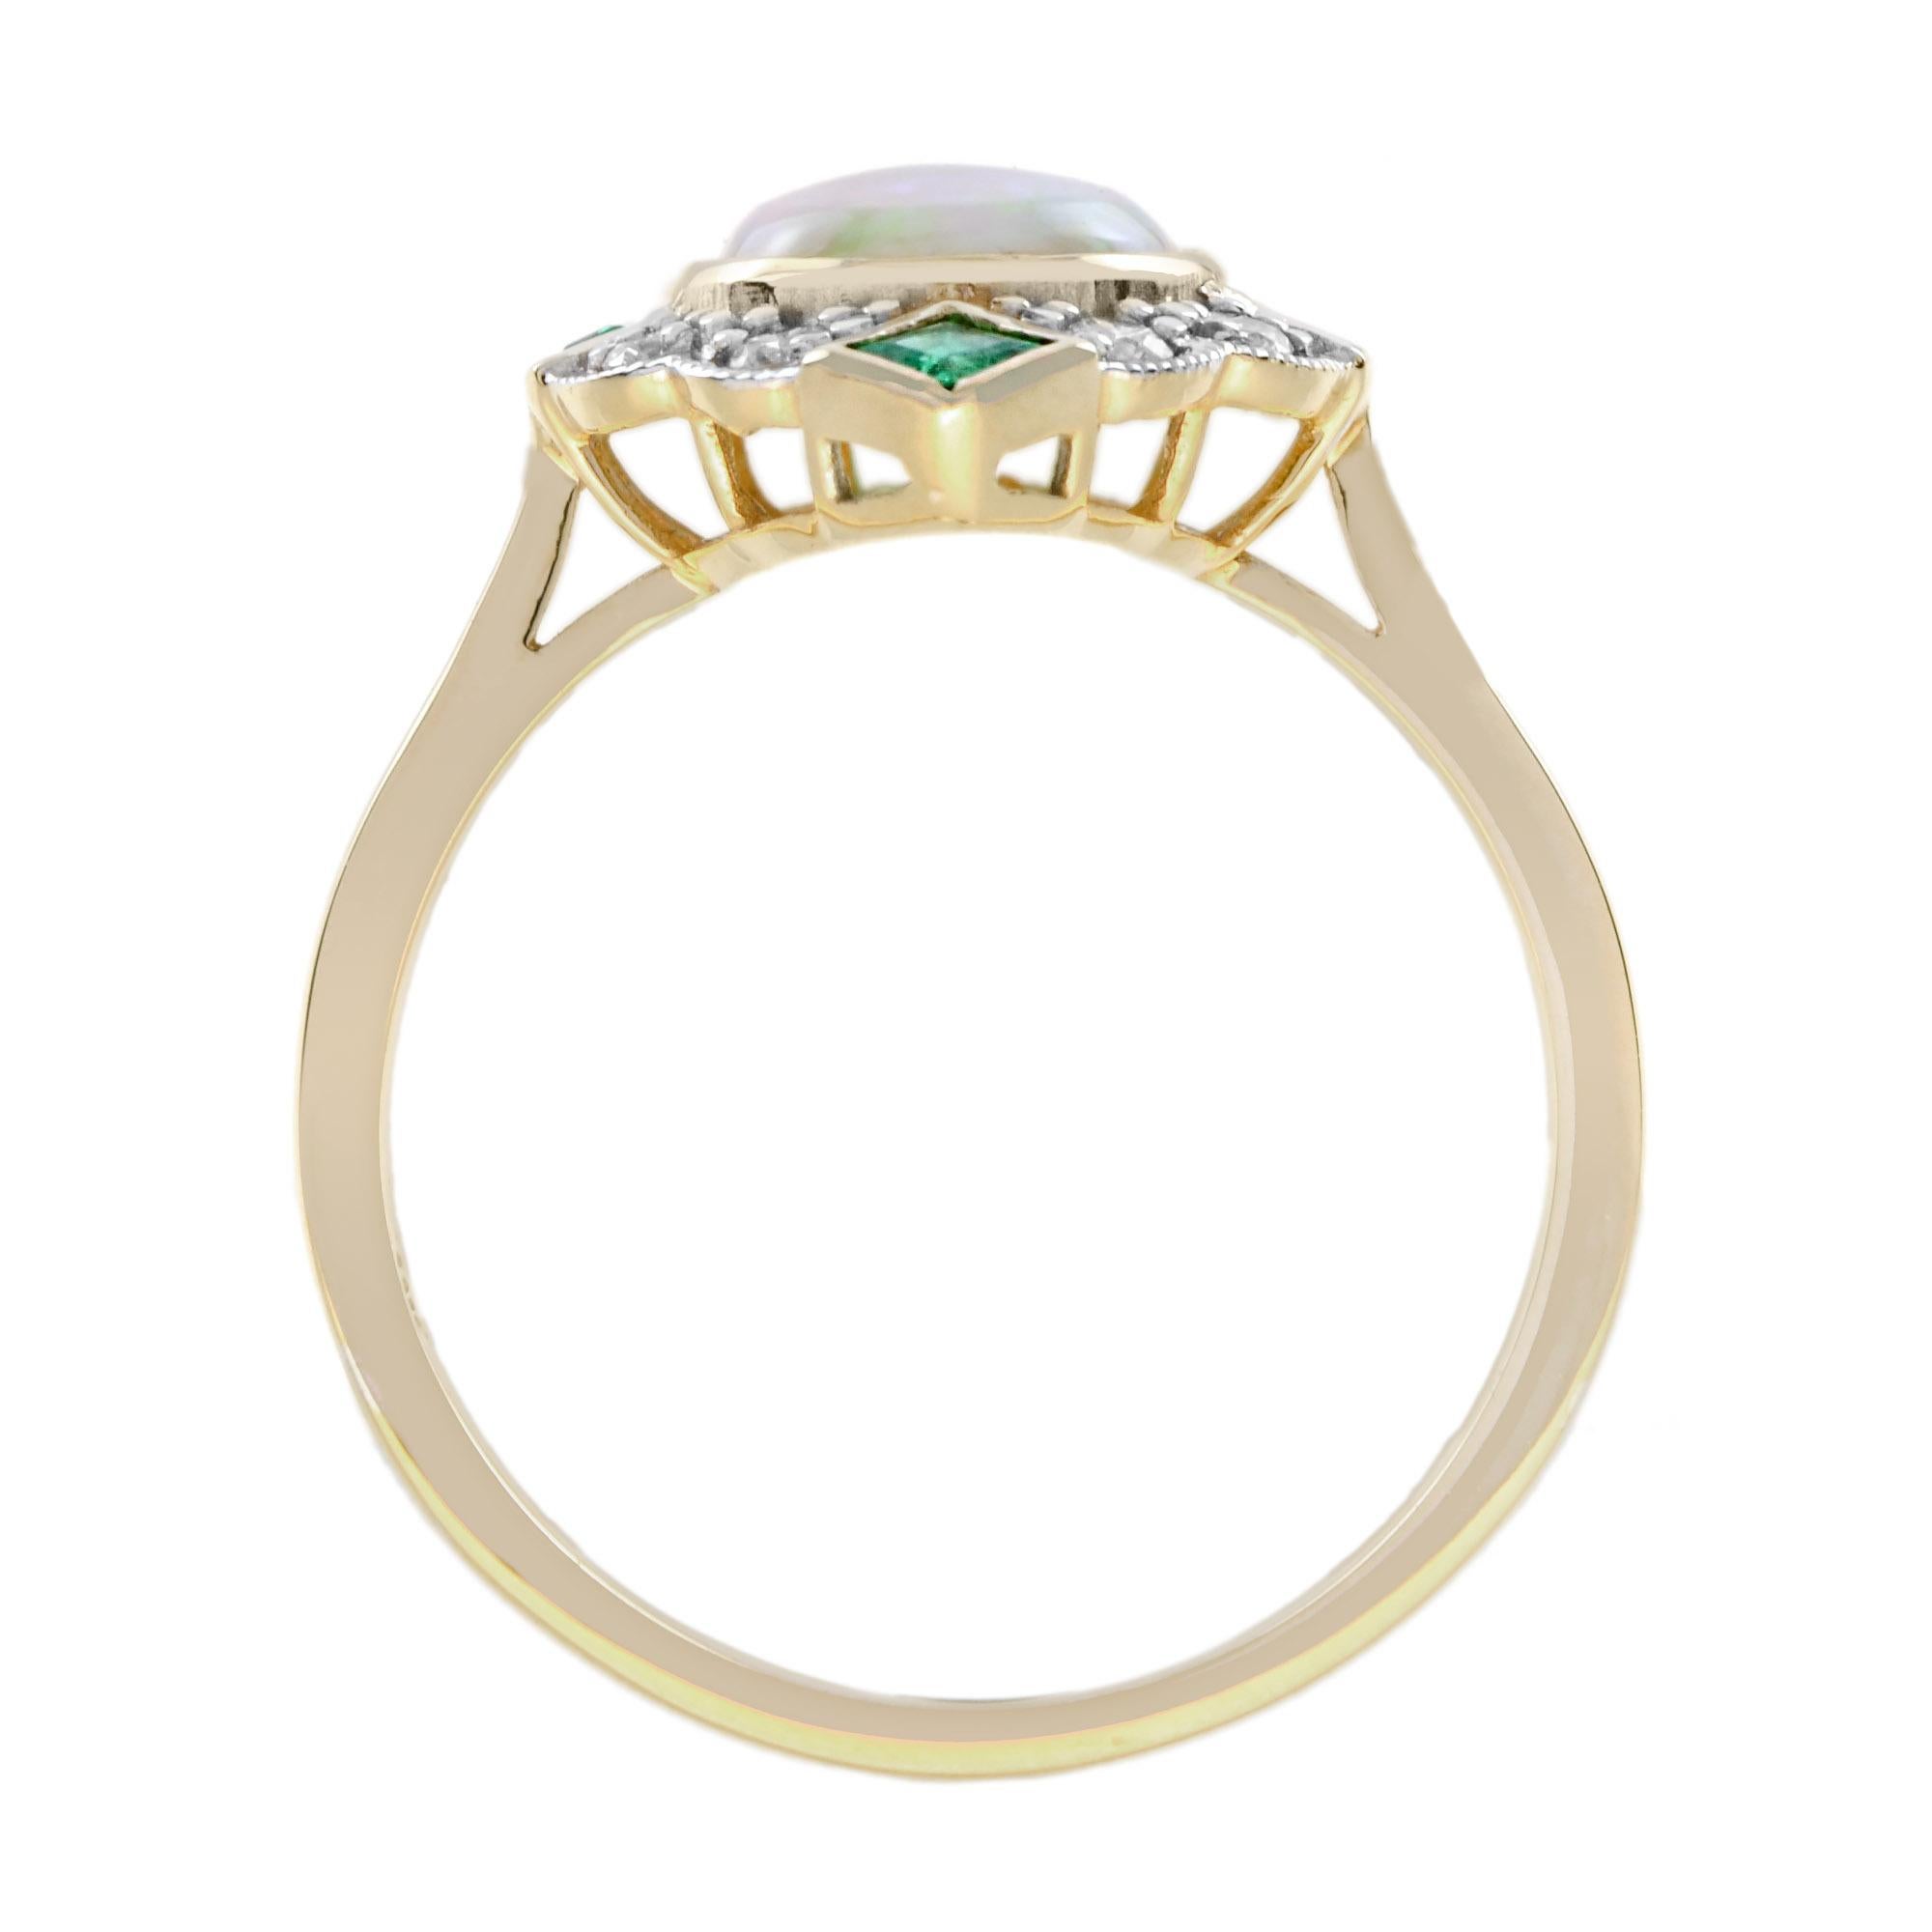 Australian Opal Emerald Diamond Art Deco Style Halo Ring in 14K Yellow Gold For Sale 1